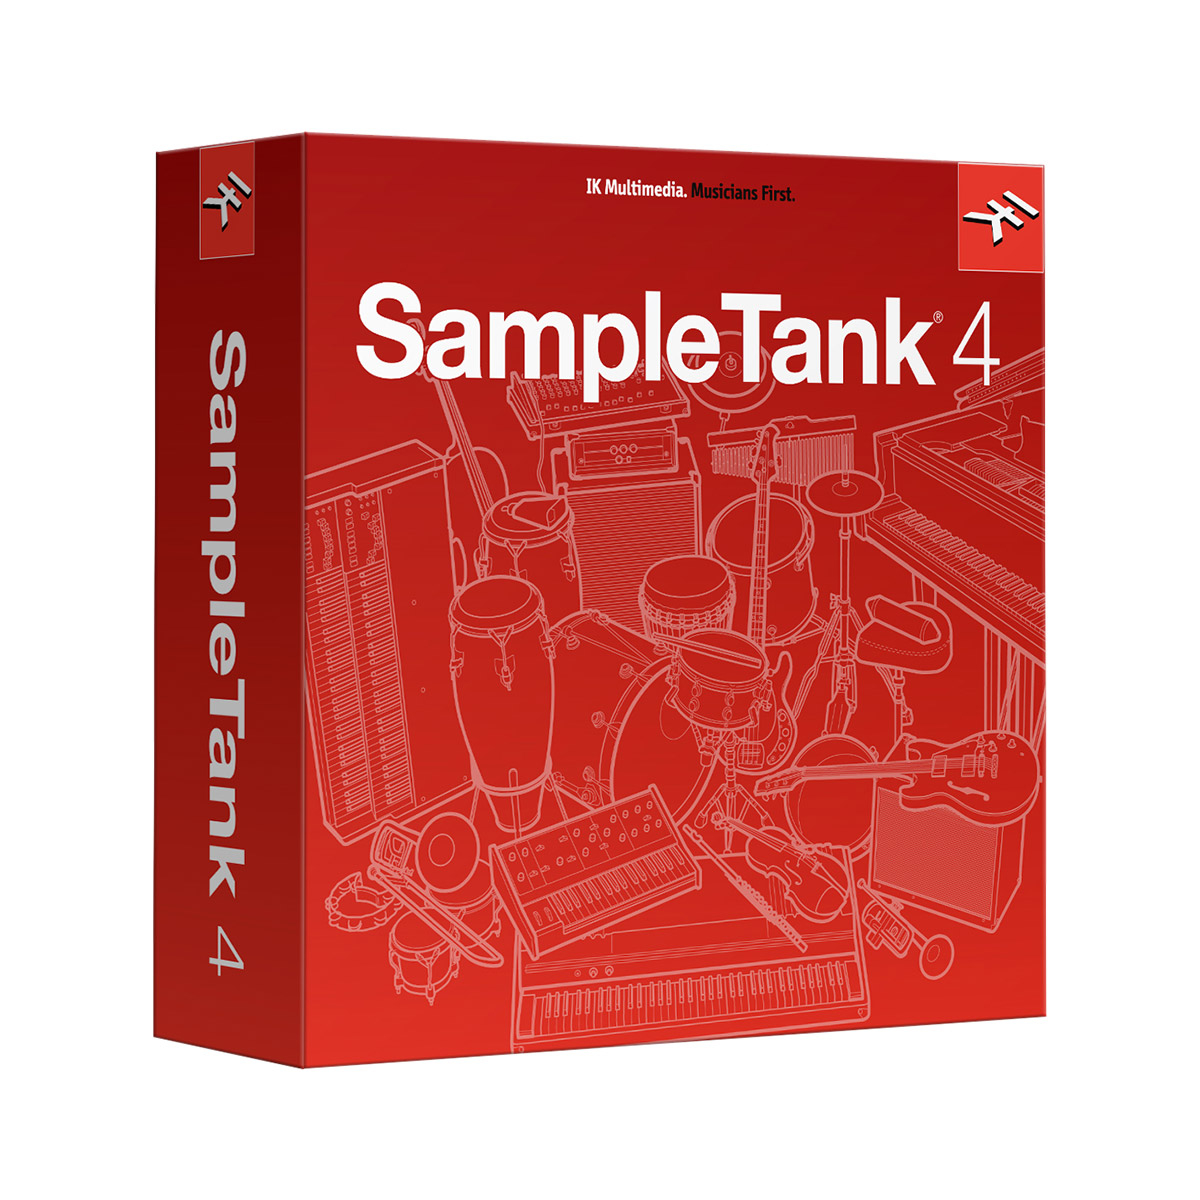 sampletank 4se